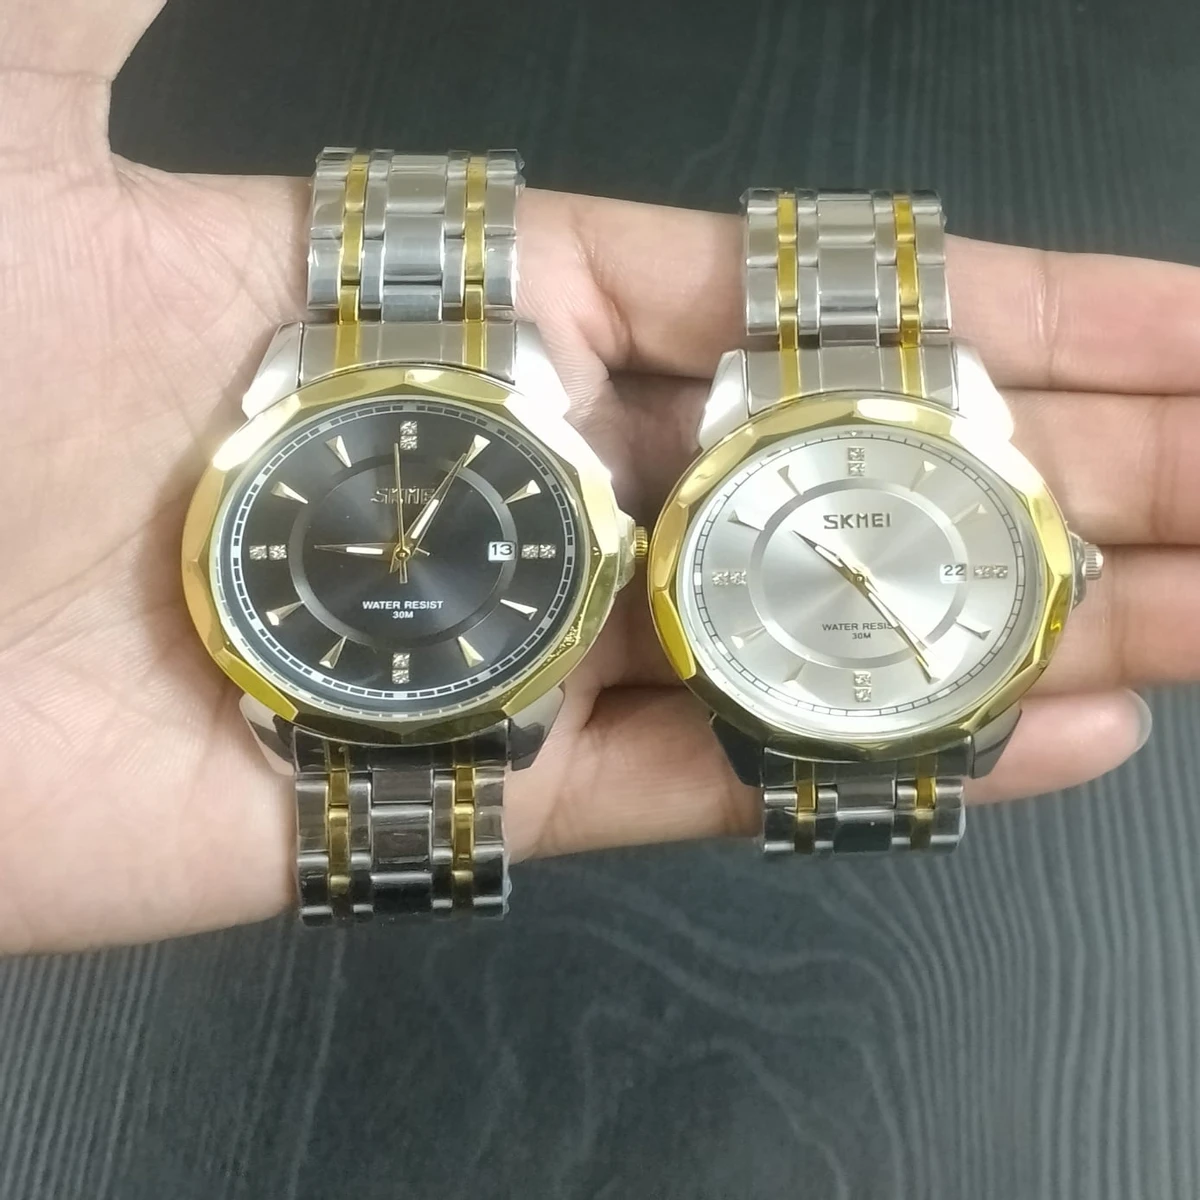 SKMEI 9263 classy elegant quartz watch